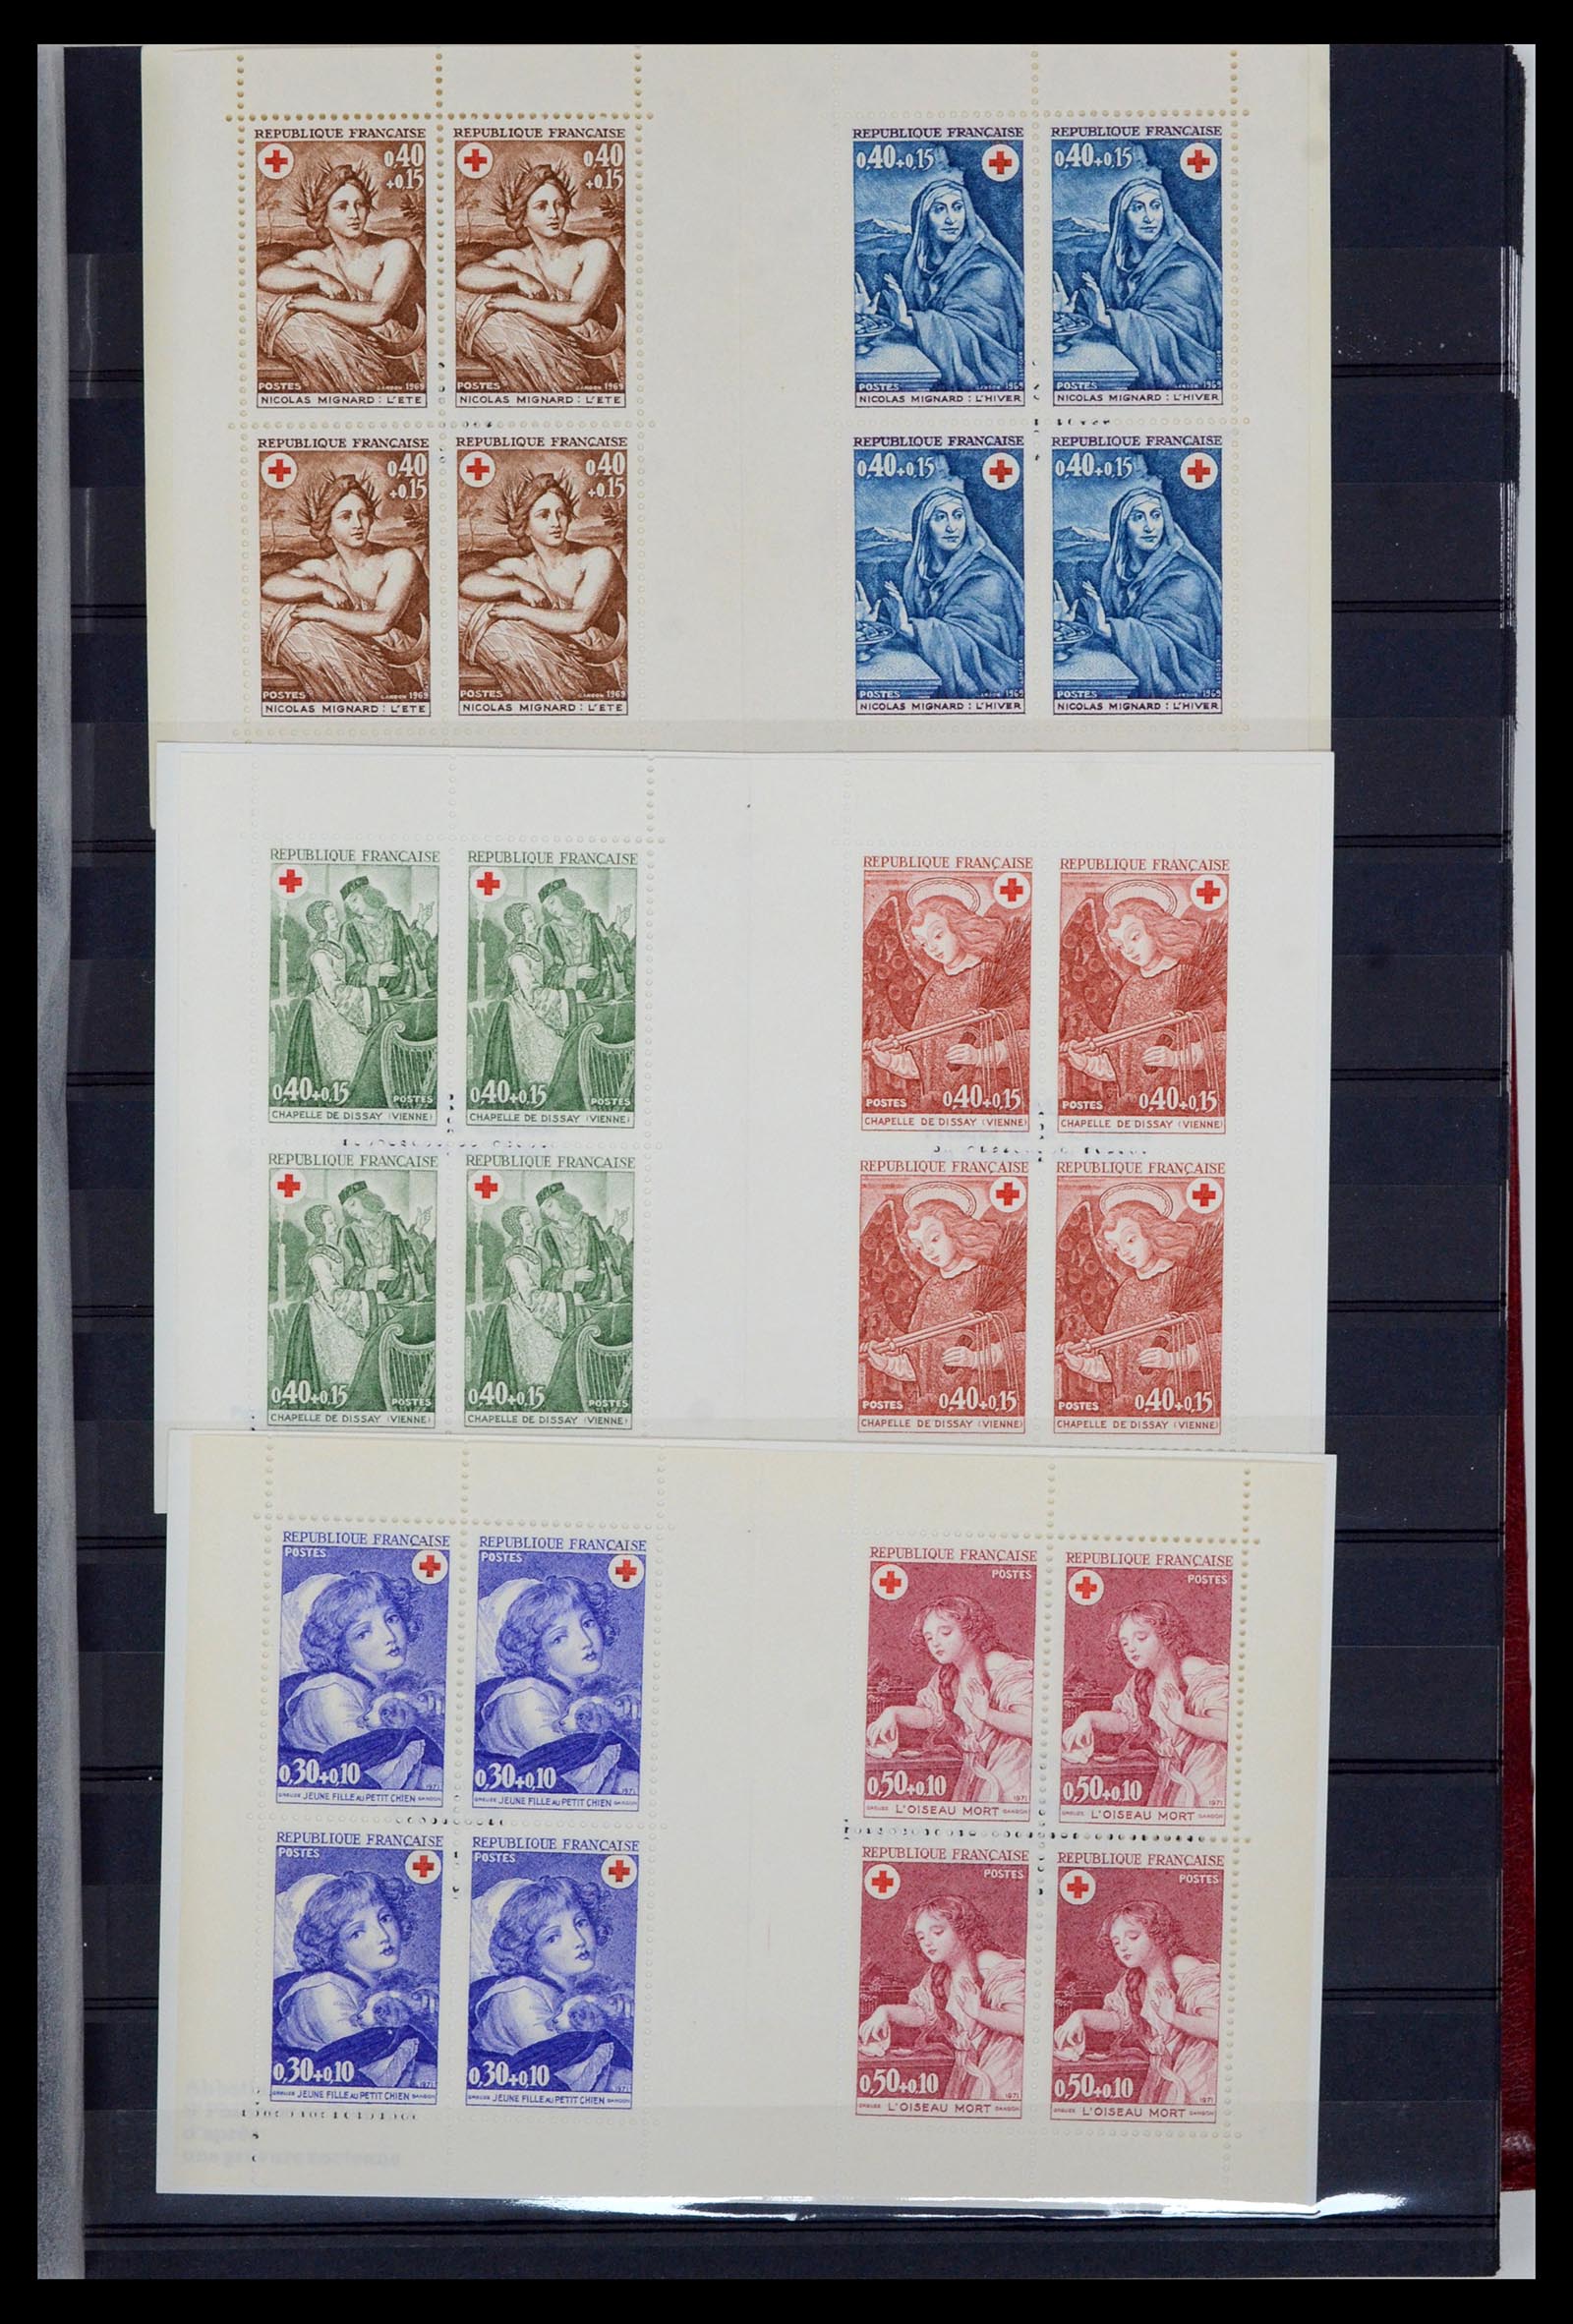 36728 007 - Stamp collection 36728 France stamp booklets 1952-2011.